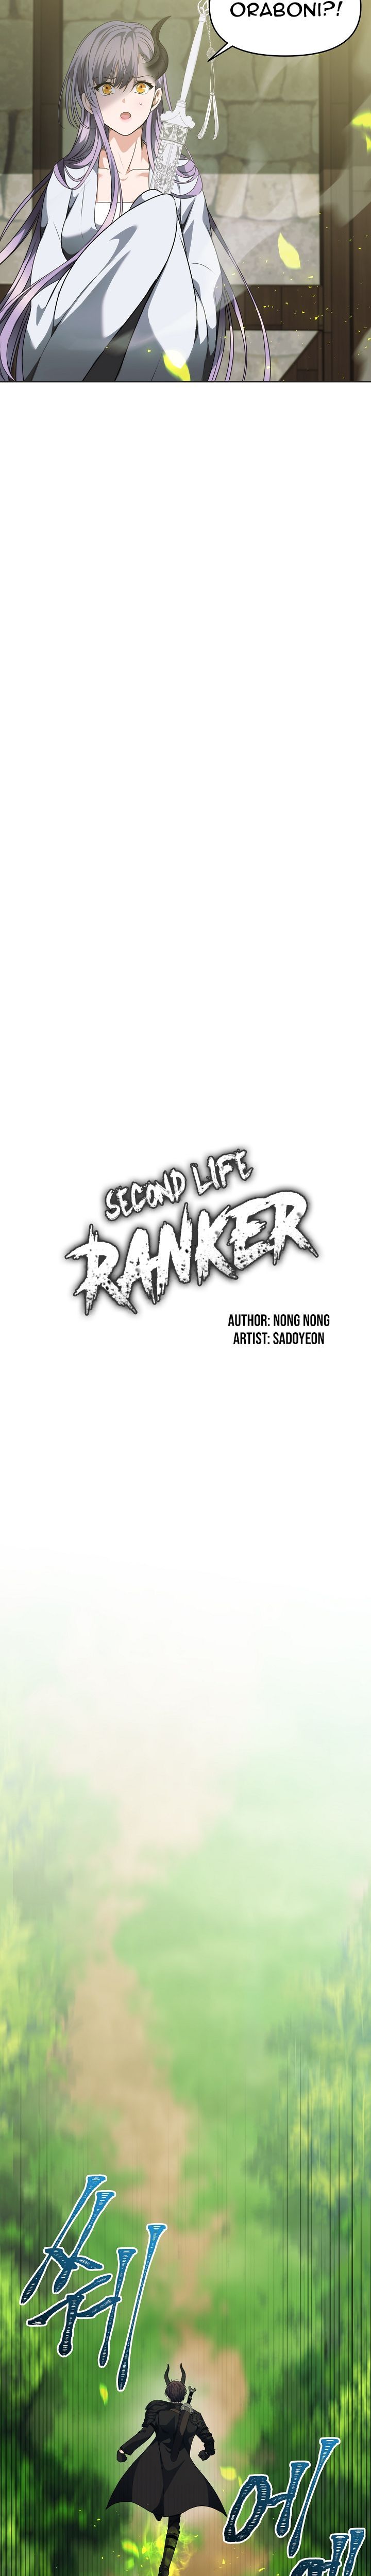 Second Life Ranker 72 6